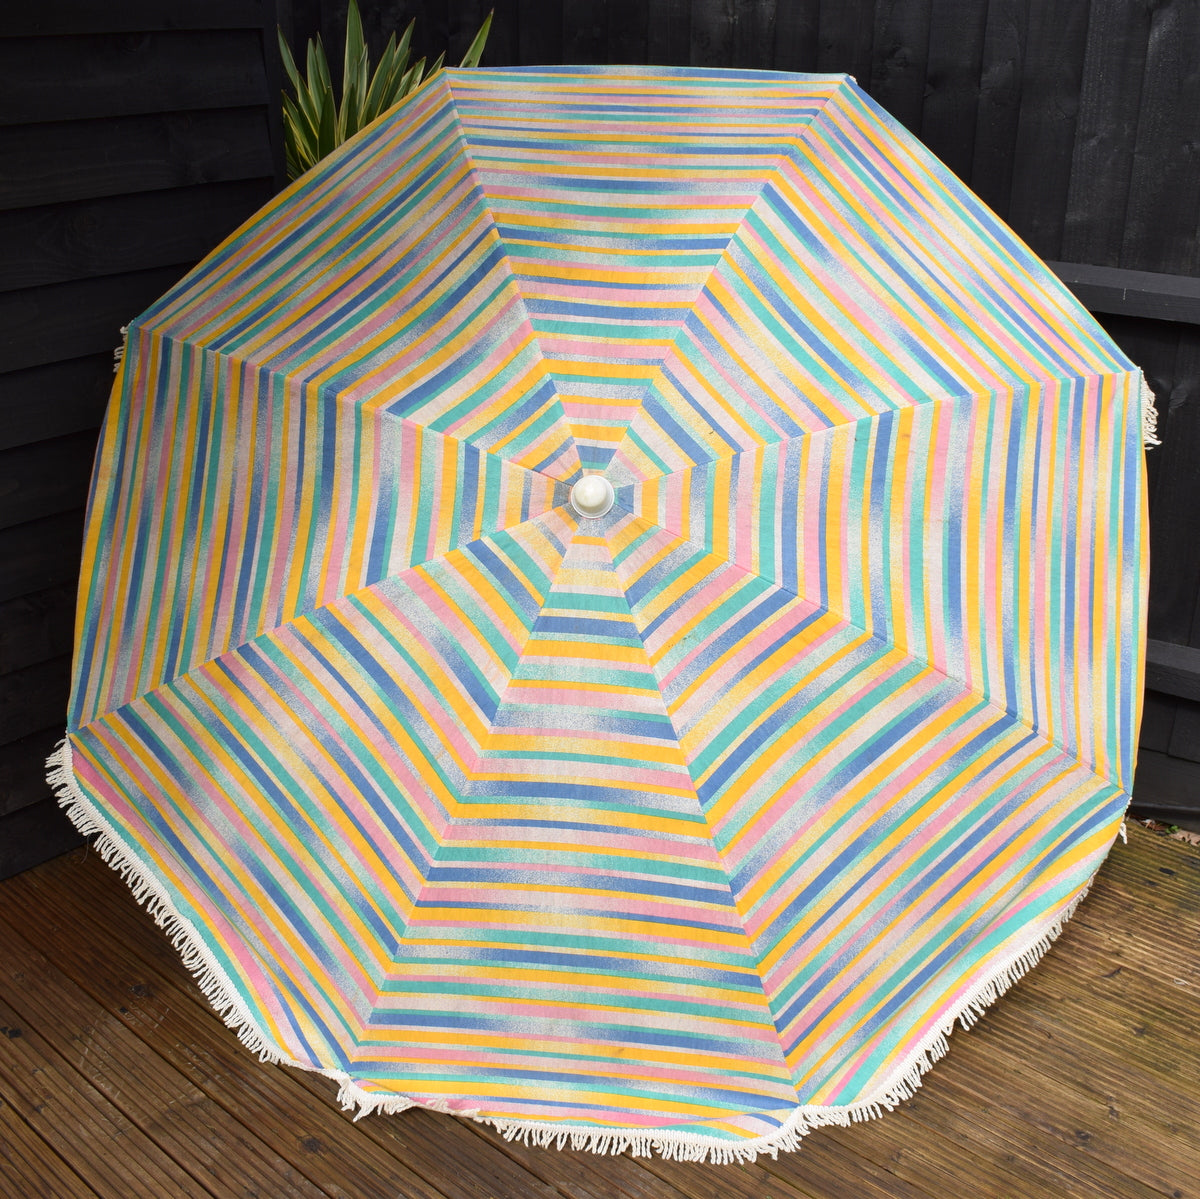 Vintage 1980s - Garden Parasol / Umbrella - Pink, Yellow, Mint